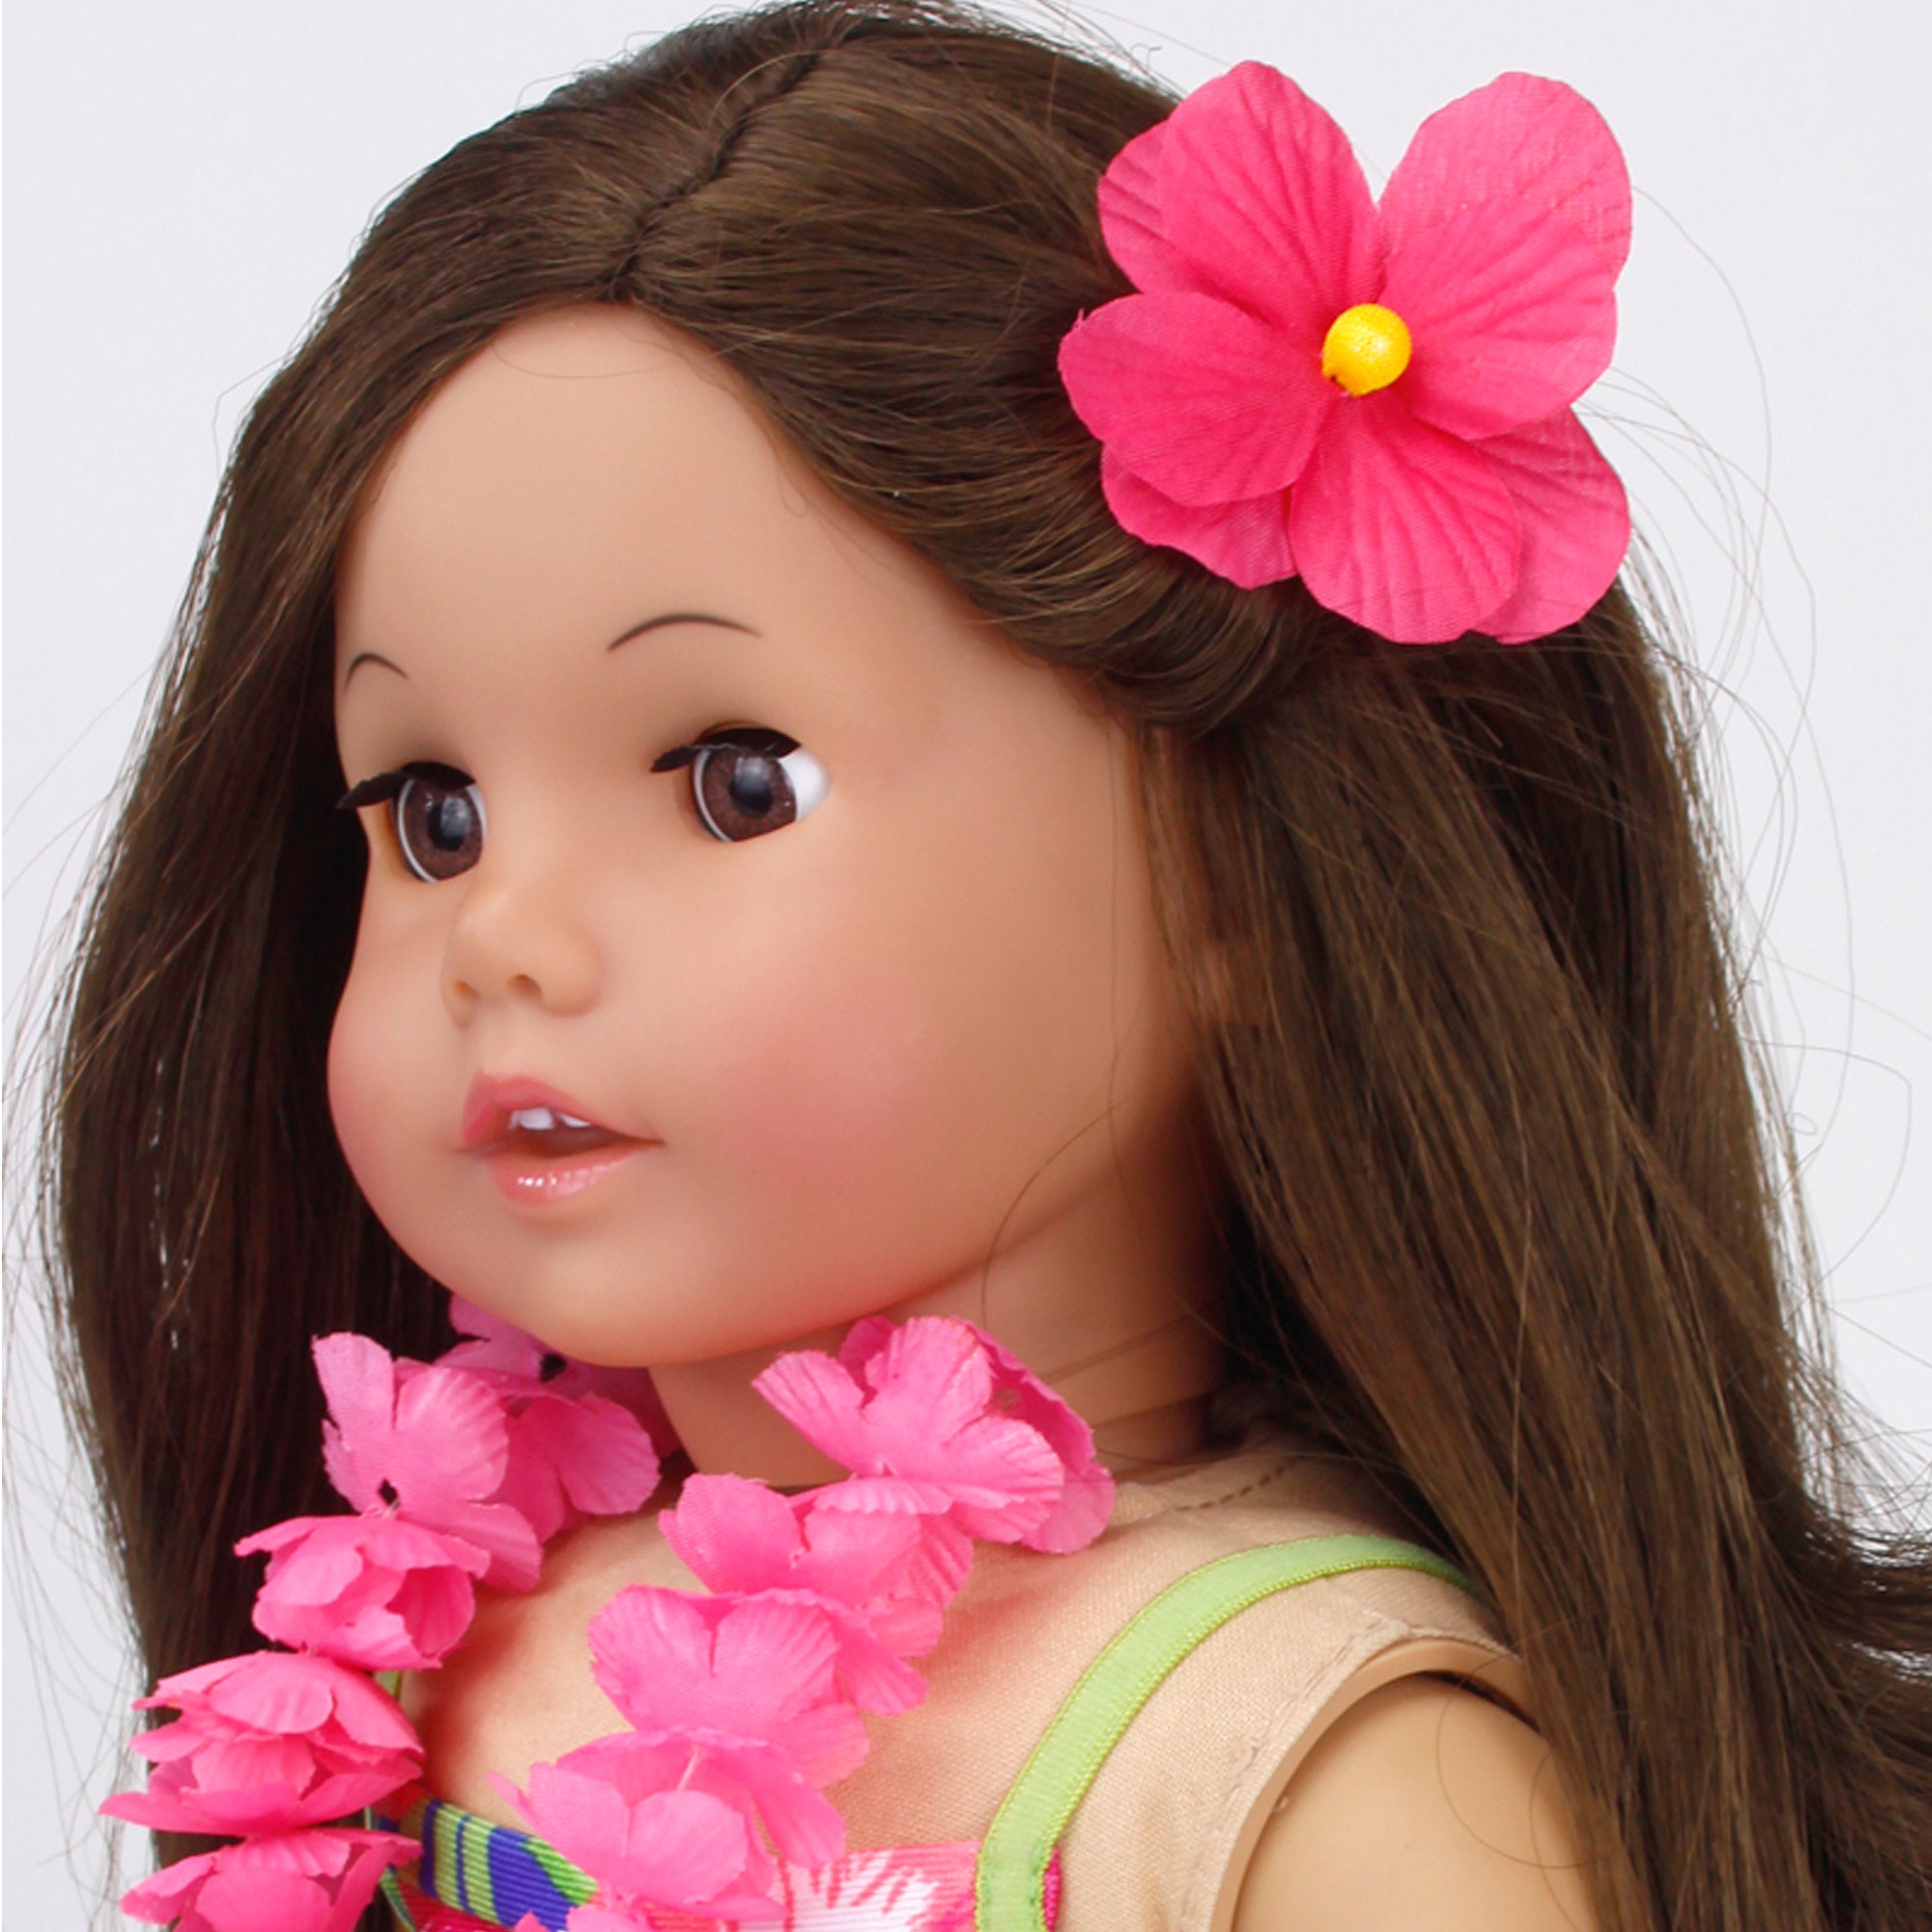 Sophia's - 18" Doll - Hawaiian Floral Bathing Suit, "Grass" Skirt, Floral Lei & Flower Hair clip